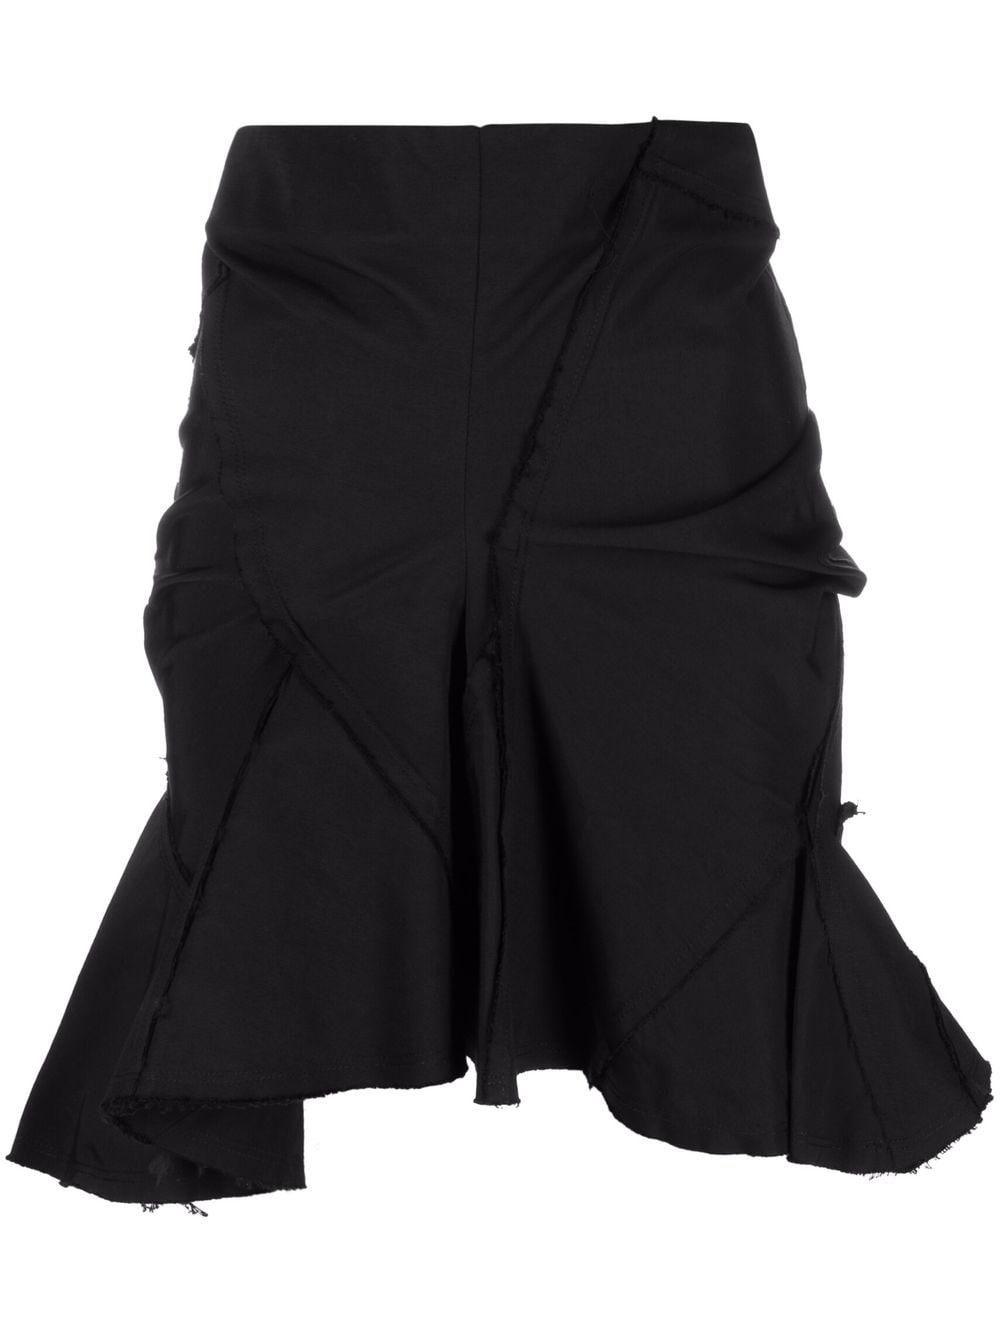 TALIA BYRE Asymmetric Ruffled Skirt in Black | Lyst